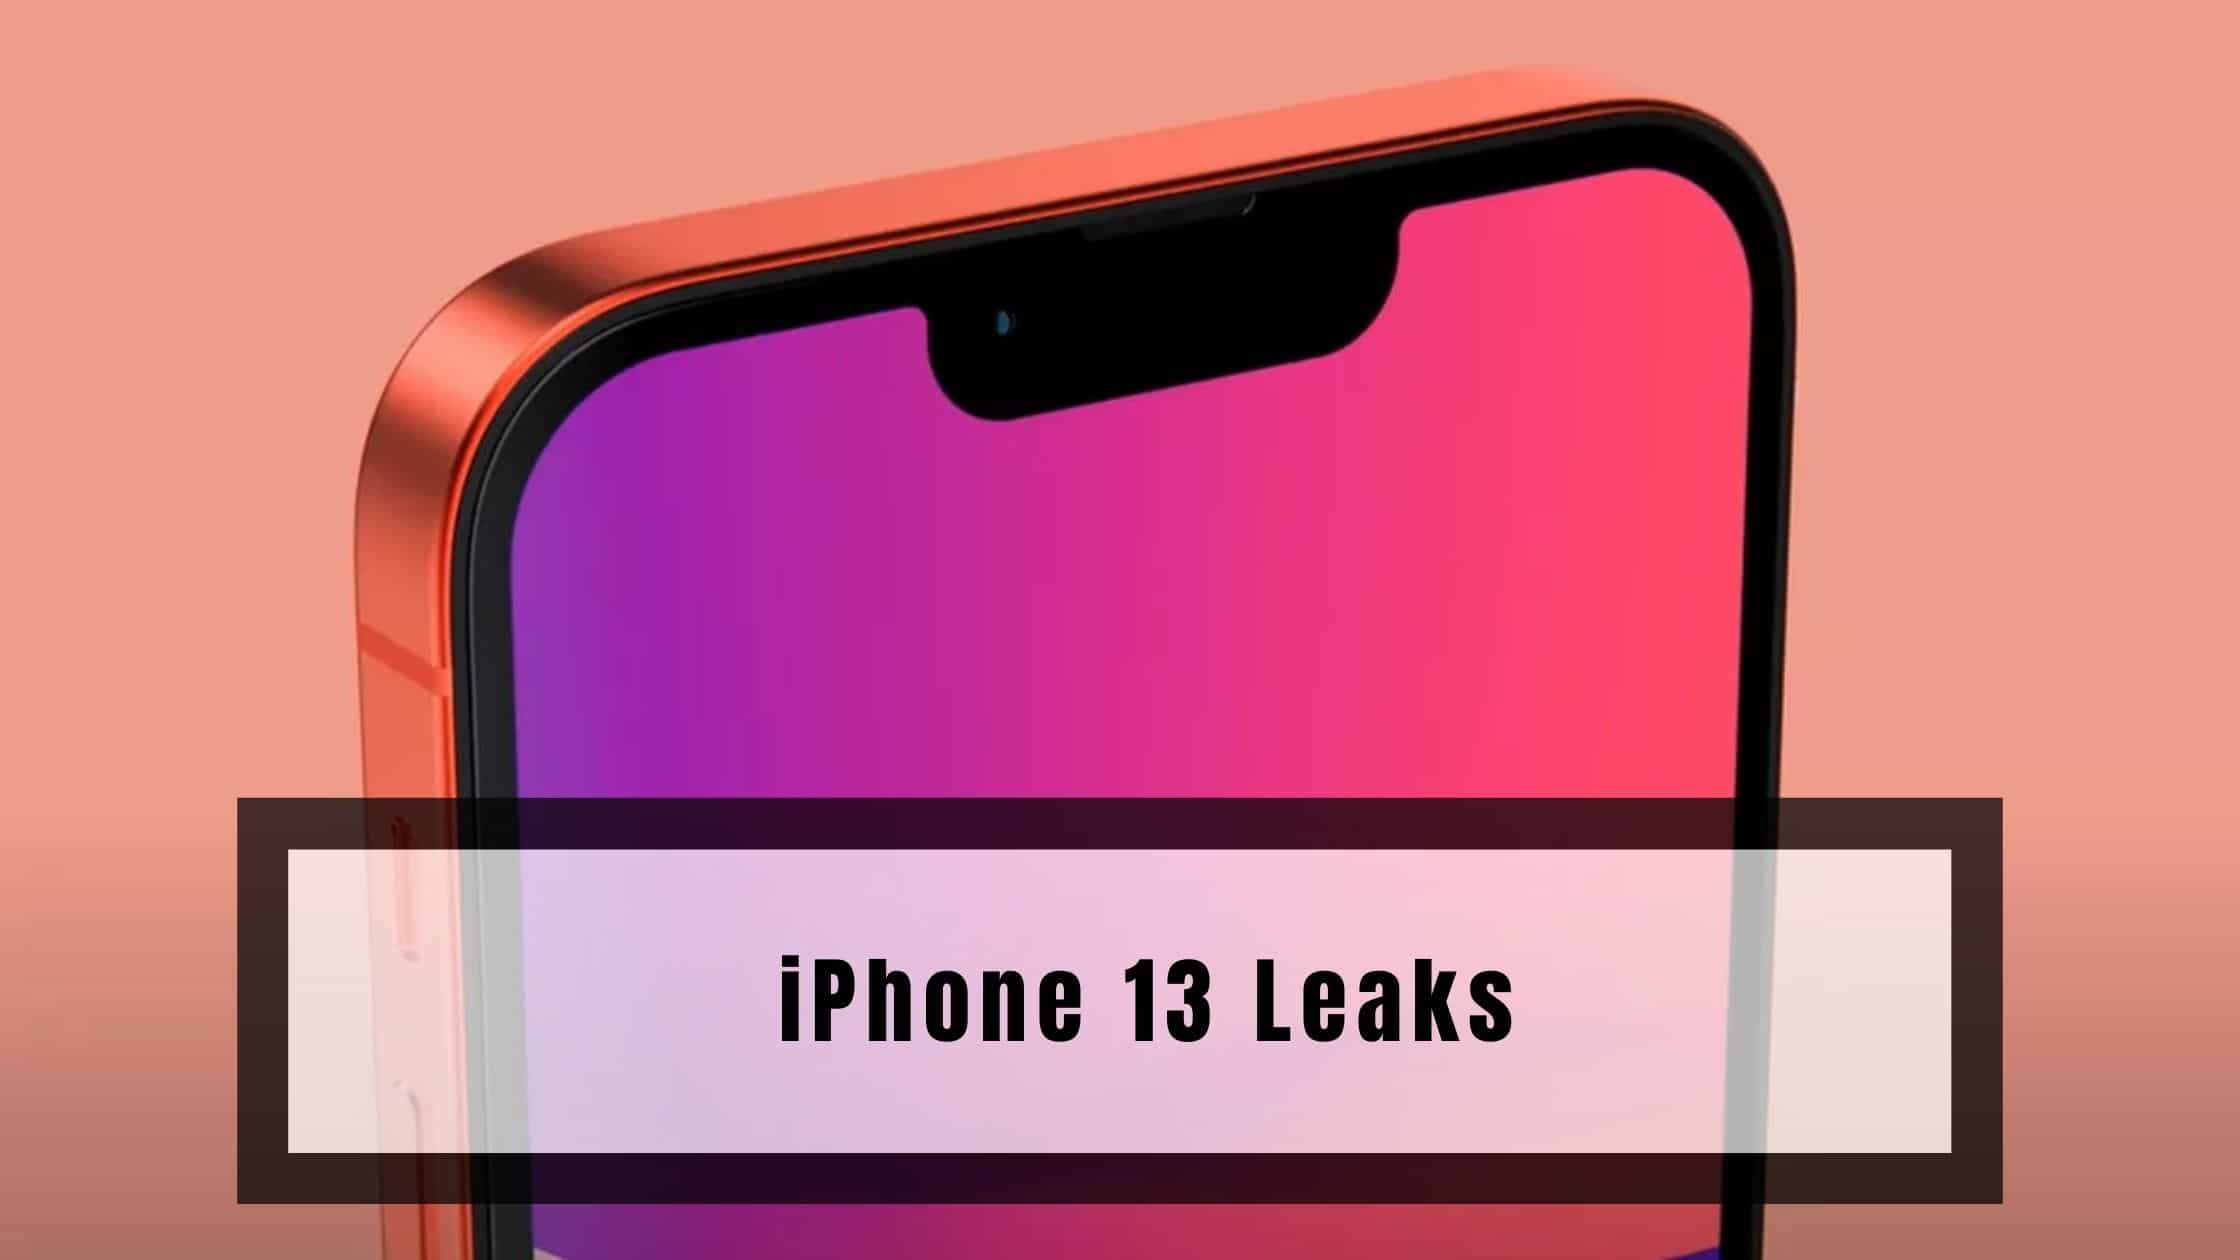 iPhone 13 Leaks||iphone 13 leaks